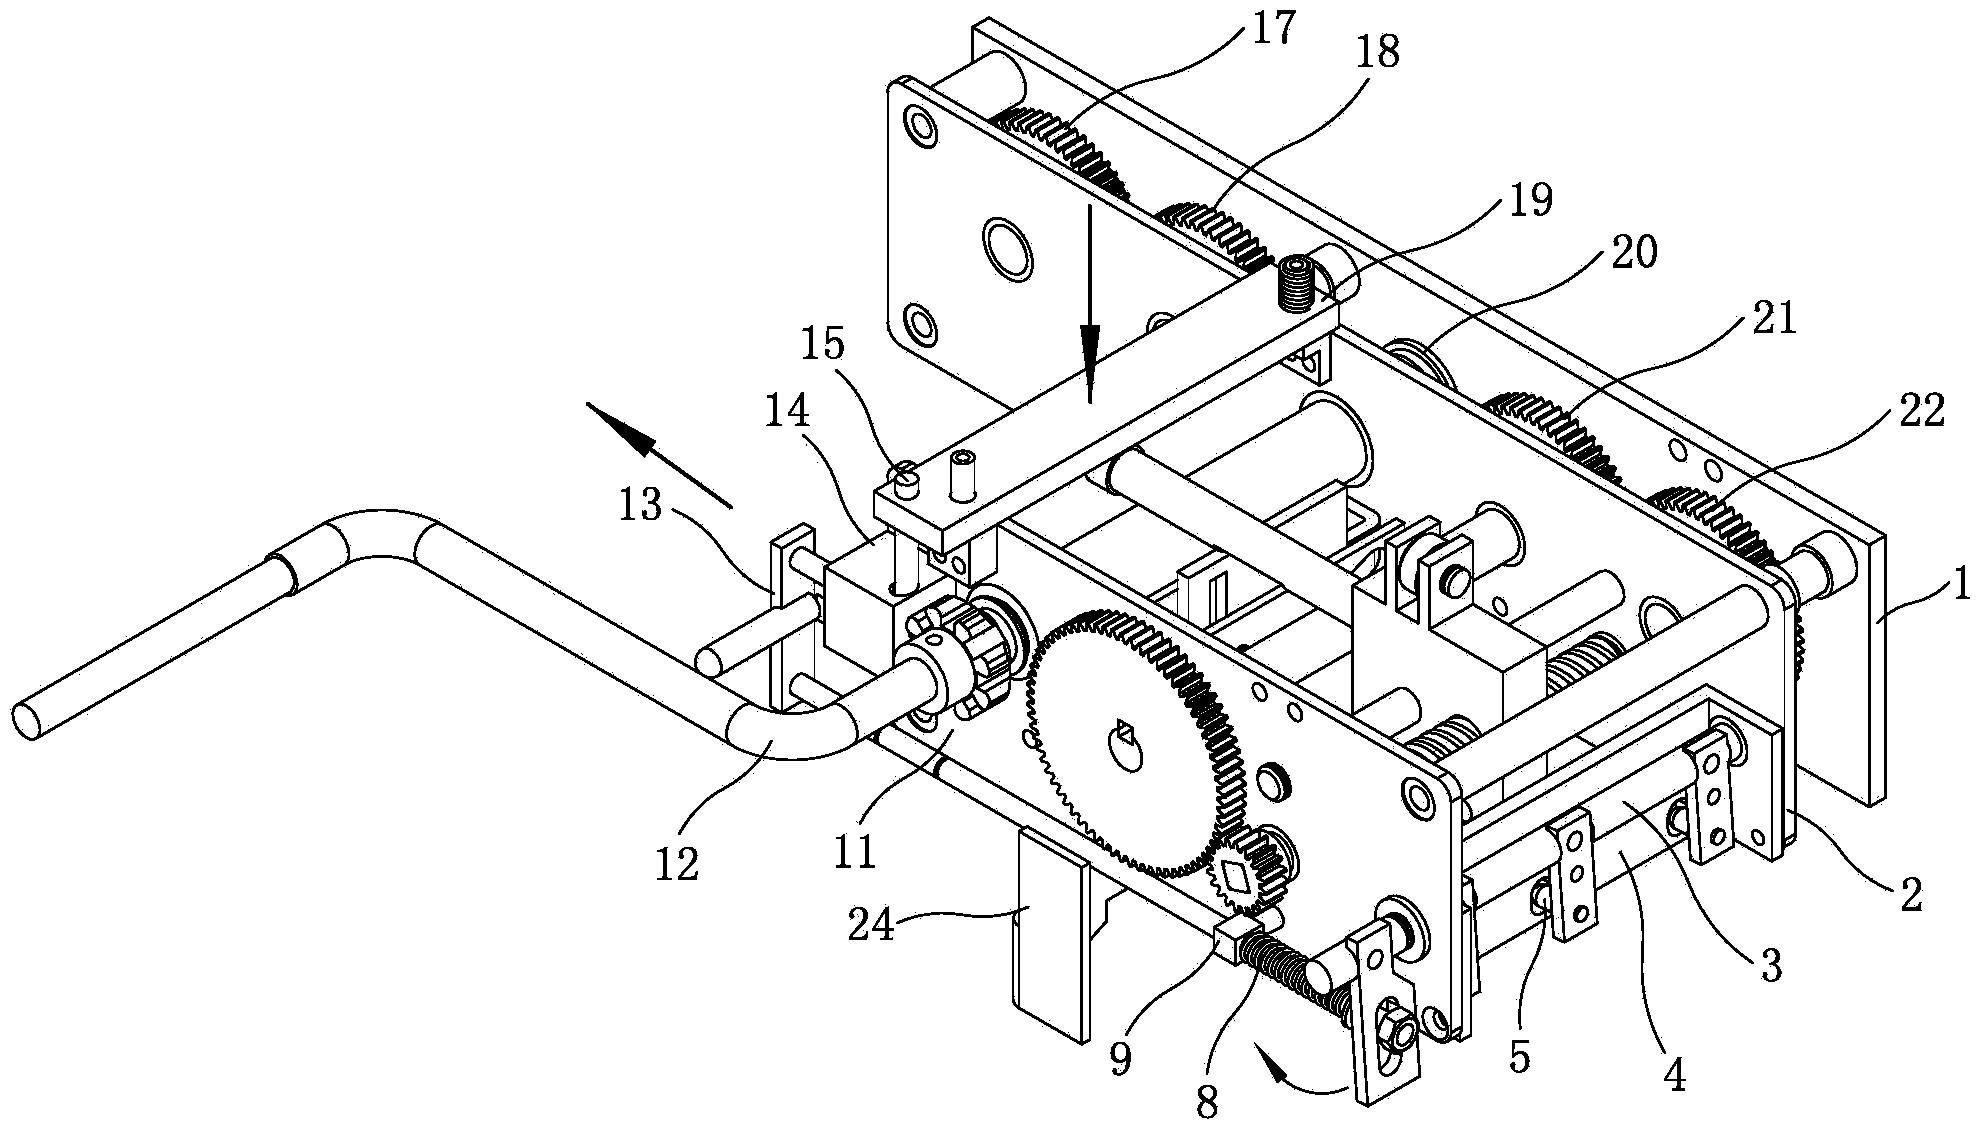 Operation-handle-locking-type three-station mechanism and operation method thereof